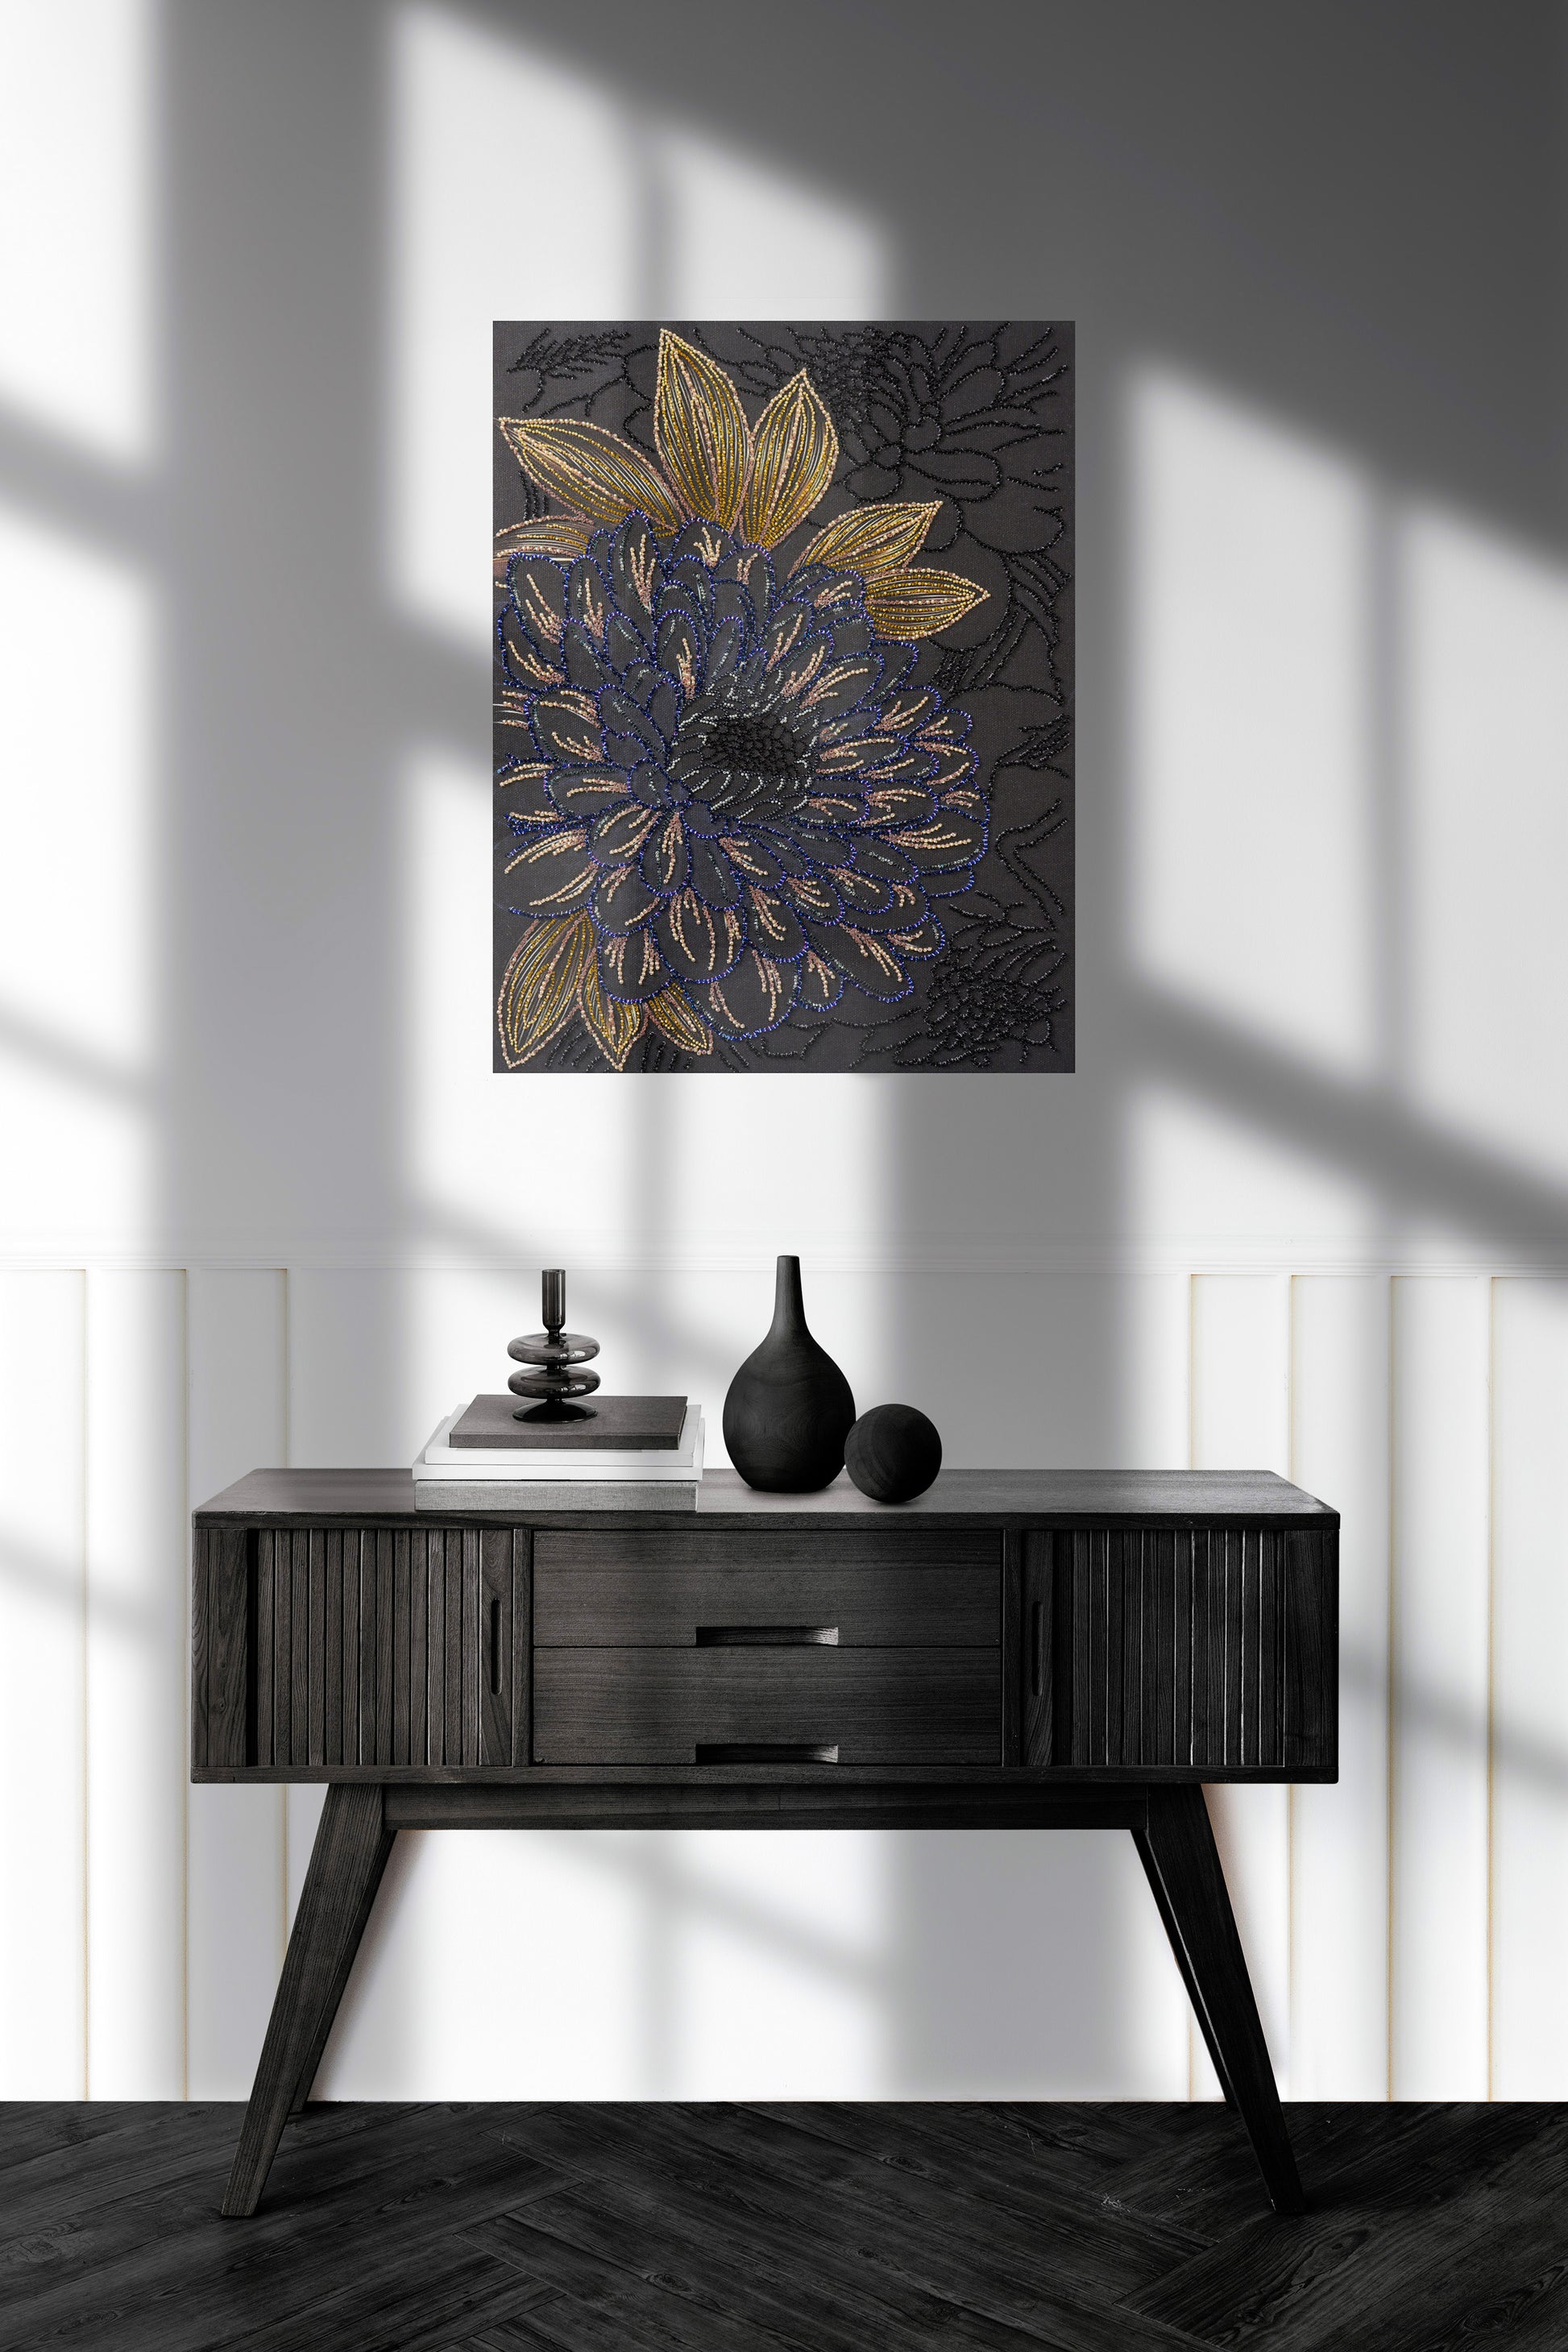 Bead embroidery kit Black flower Size: 11.8"×15.7" (30×40 cm)